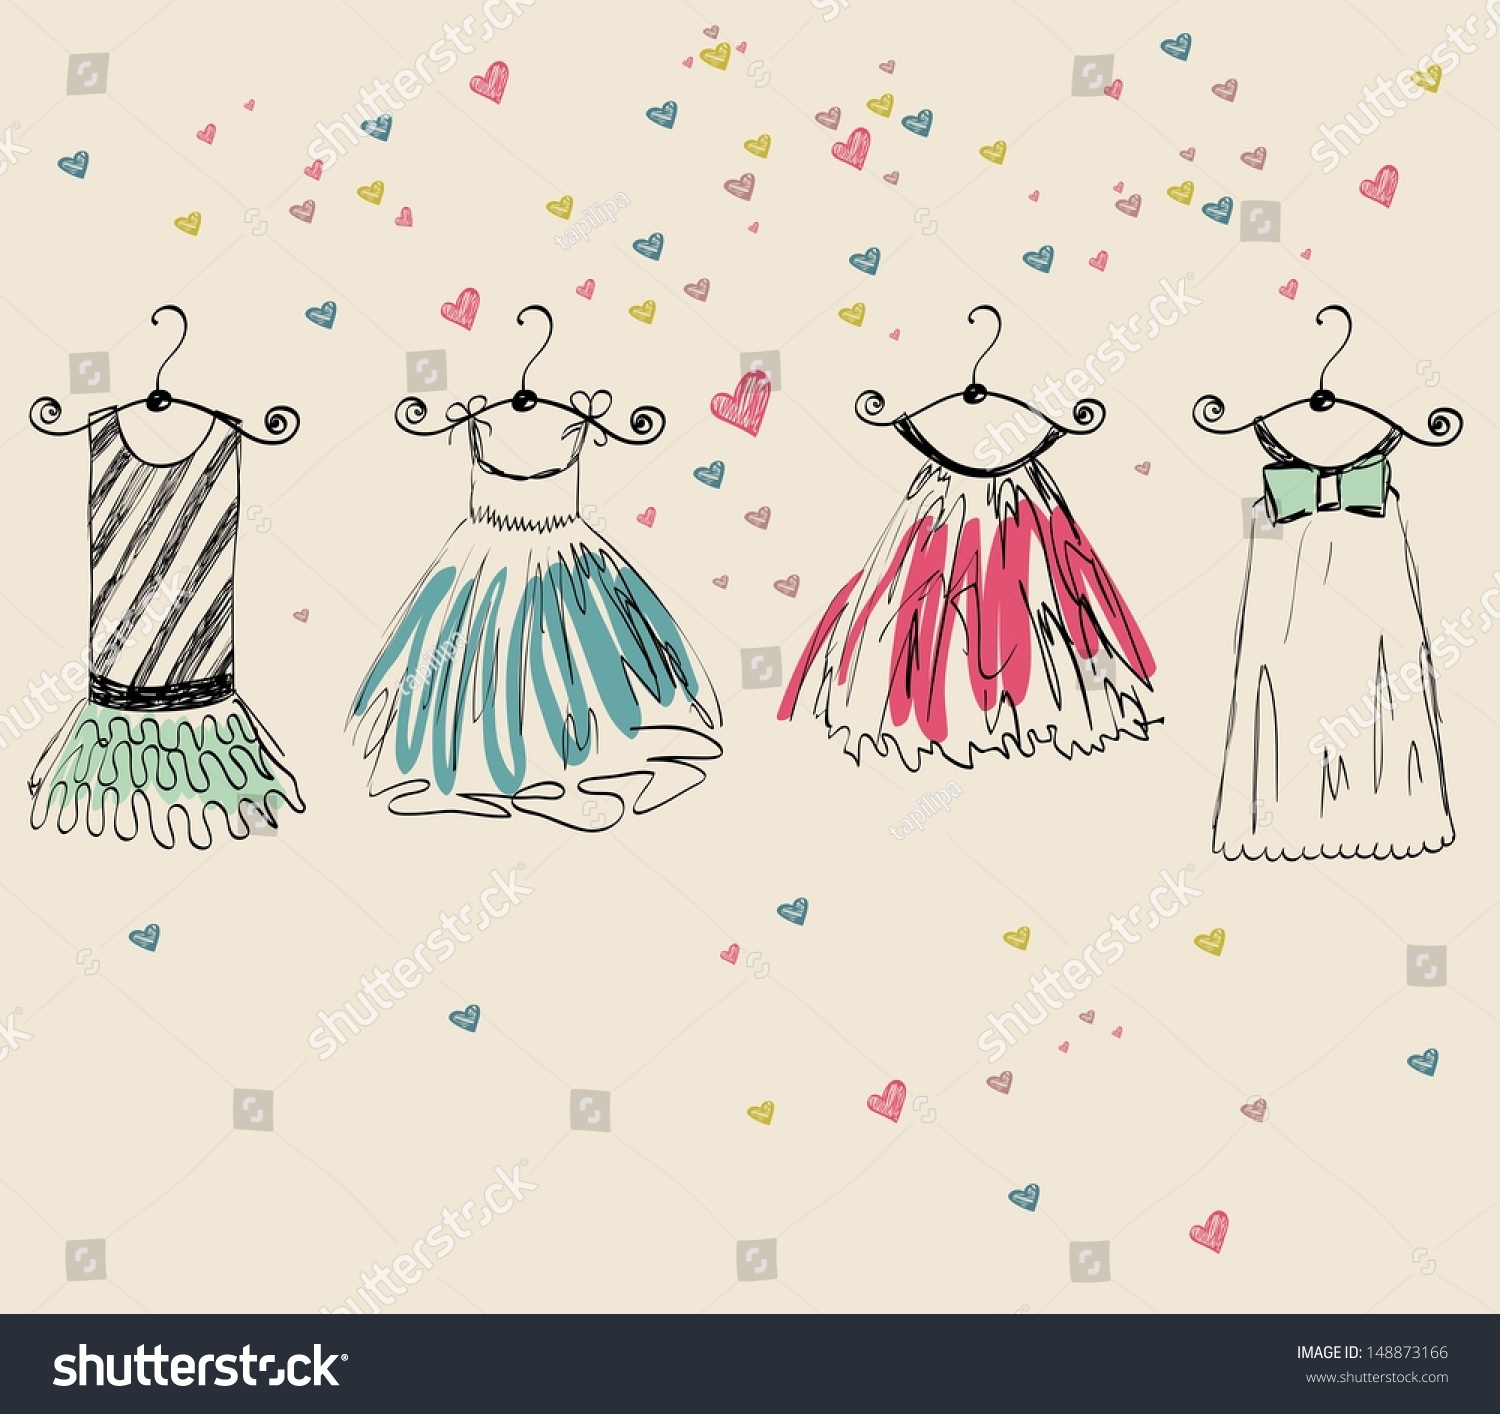 97,795 Fashion kids sketch Images, Stock Photos & Vectors | Shutterstock